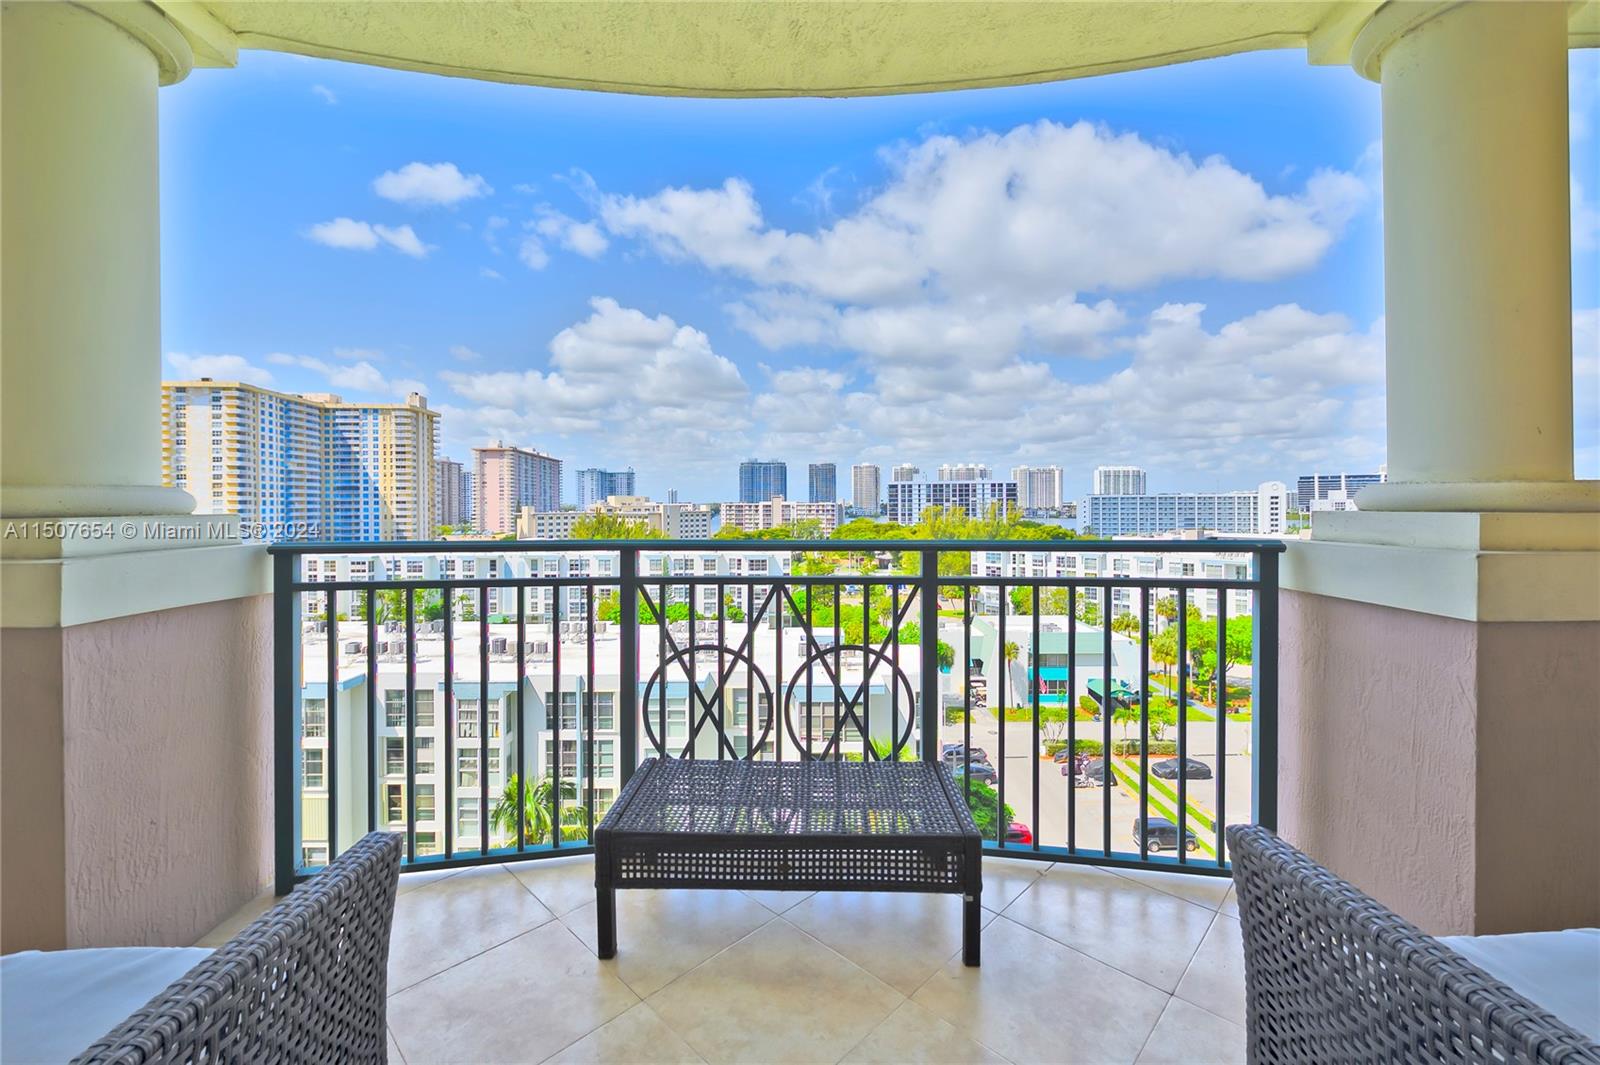 Rental Property at 17555 Atlantic Blvd 904, Sunny Isles Beach, Miami-Dade County, Florida - Bedrooms: 2 
Bathrooms: 2  - $3,800 MO.